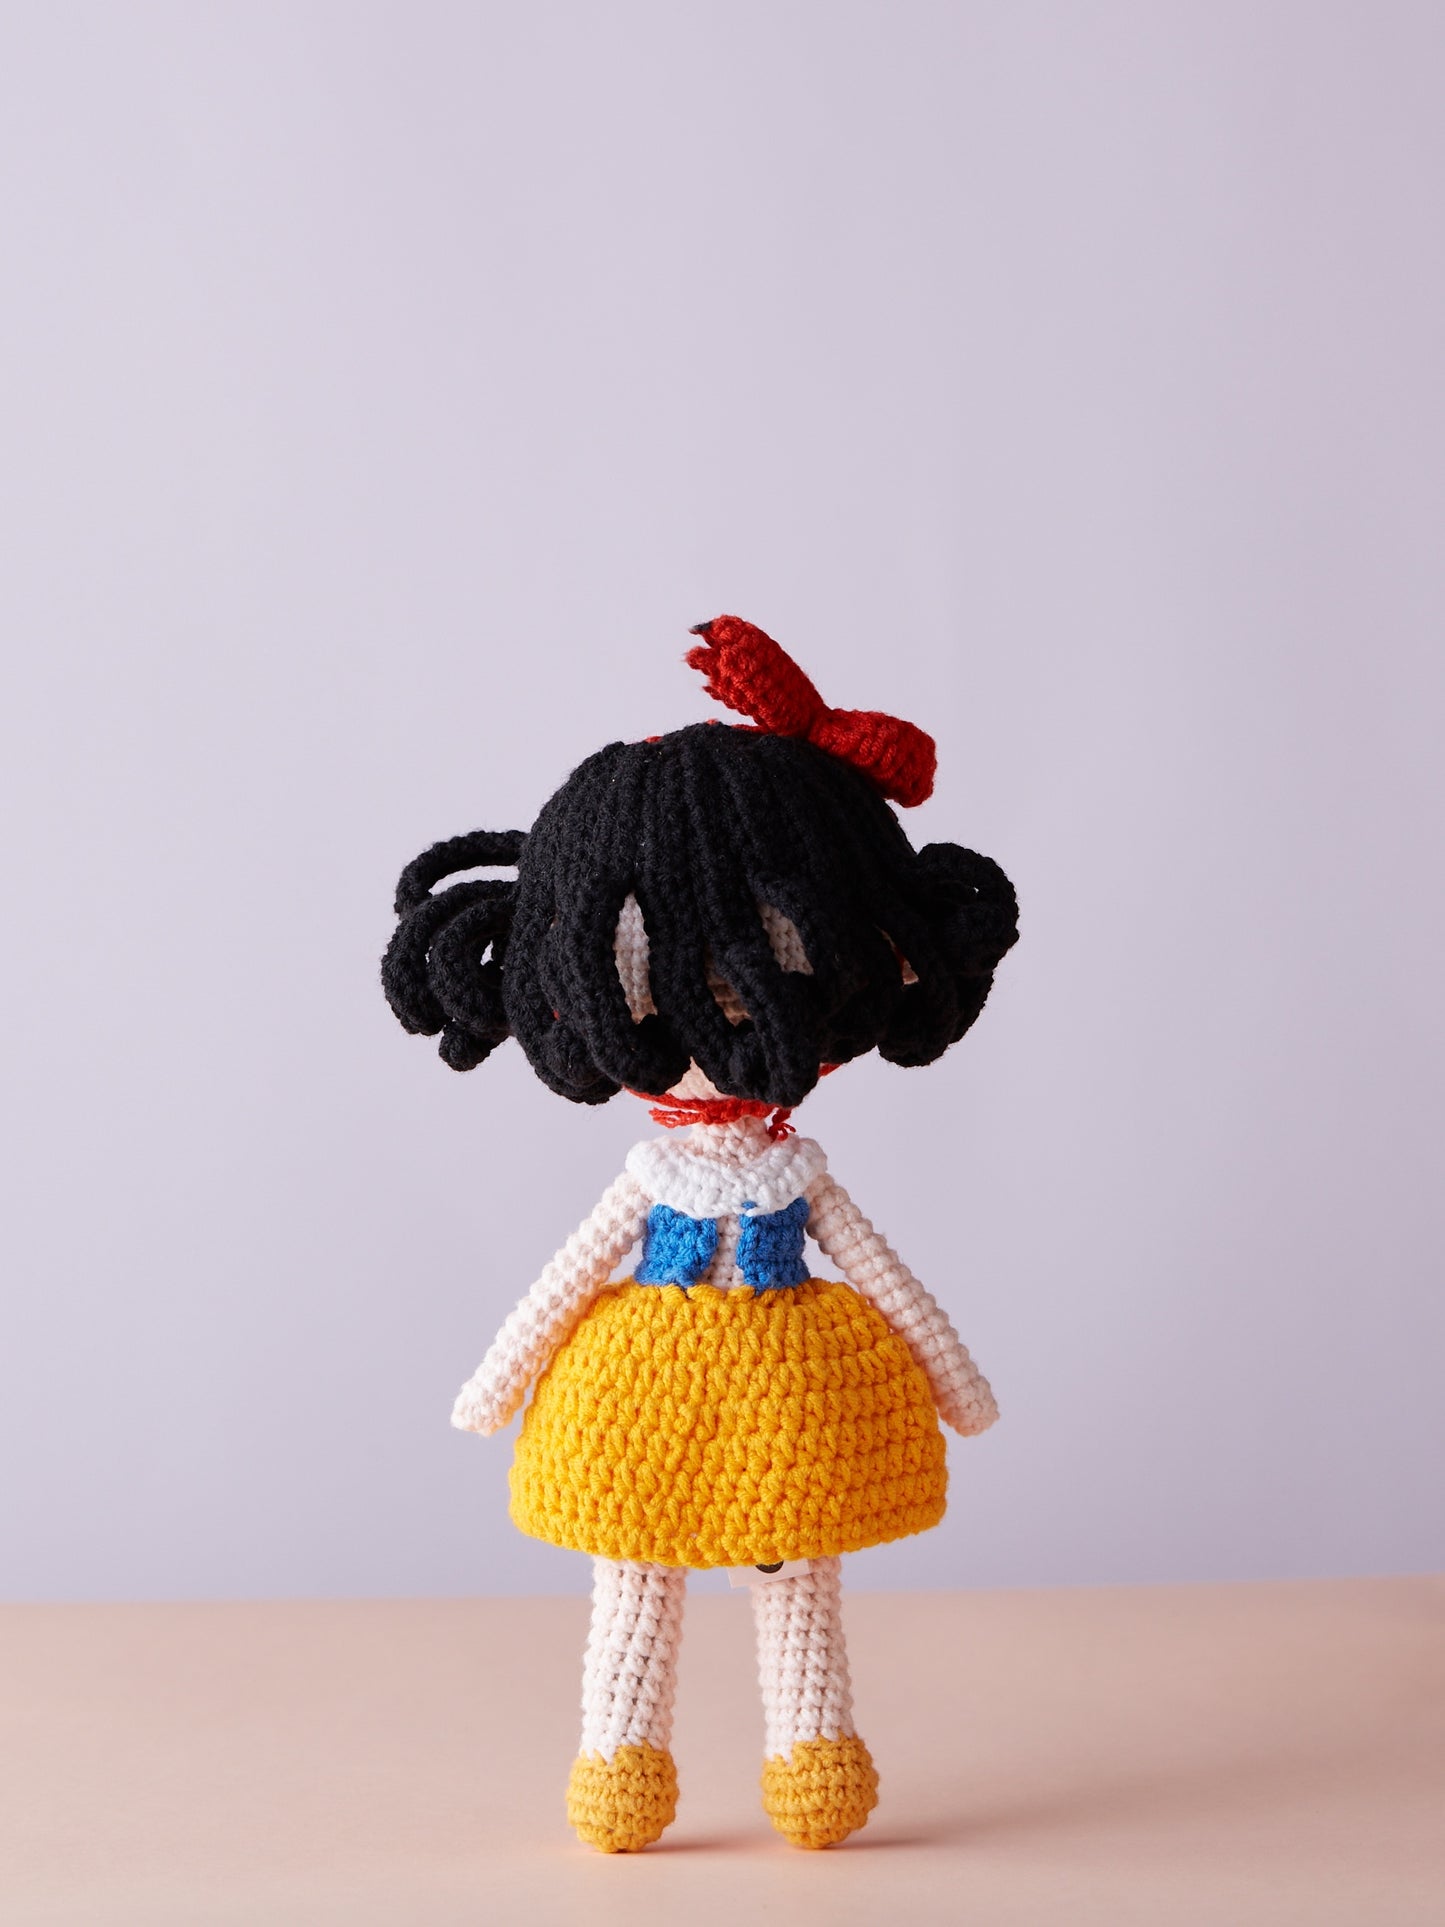 Snow White The Crochet Stuffed Doll